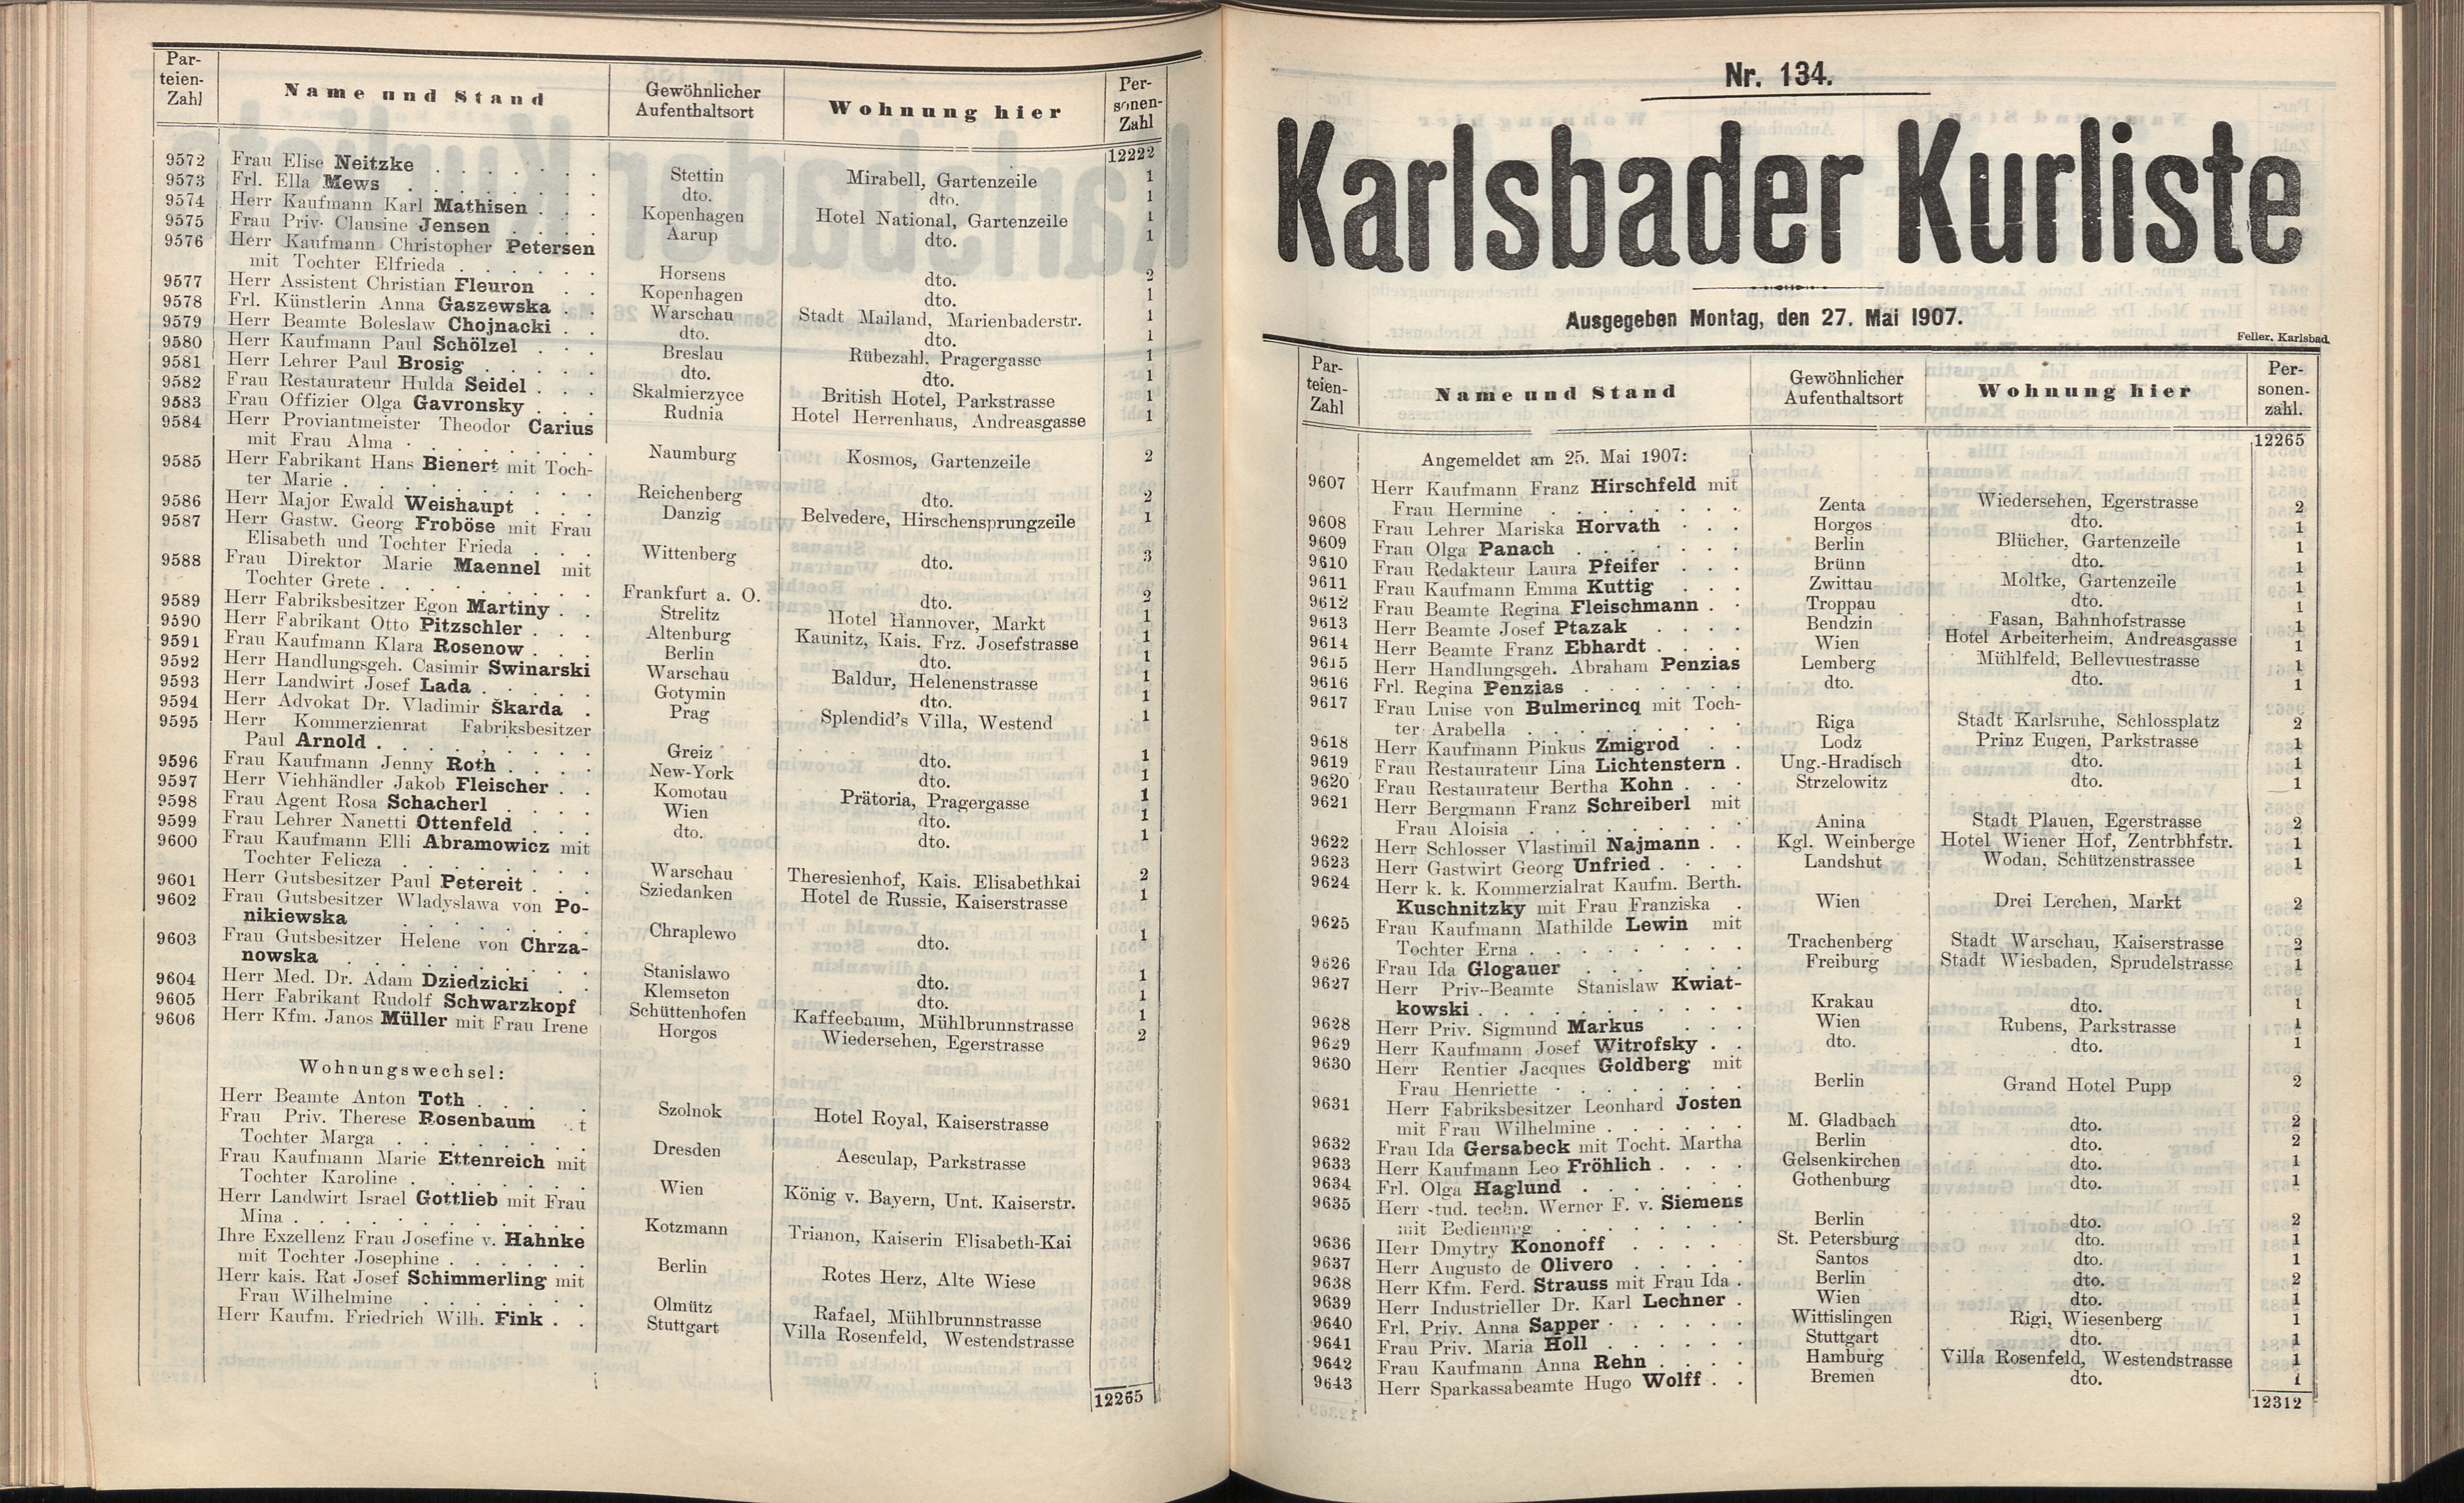 247. soap-kv_knihovna_karlsbader-kurliste-1907_2480